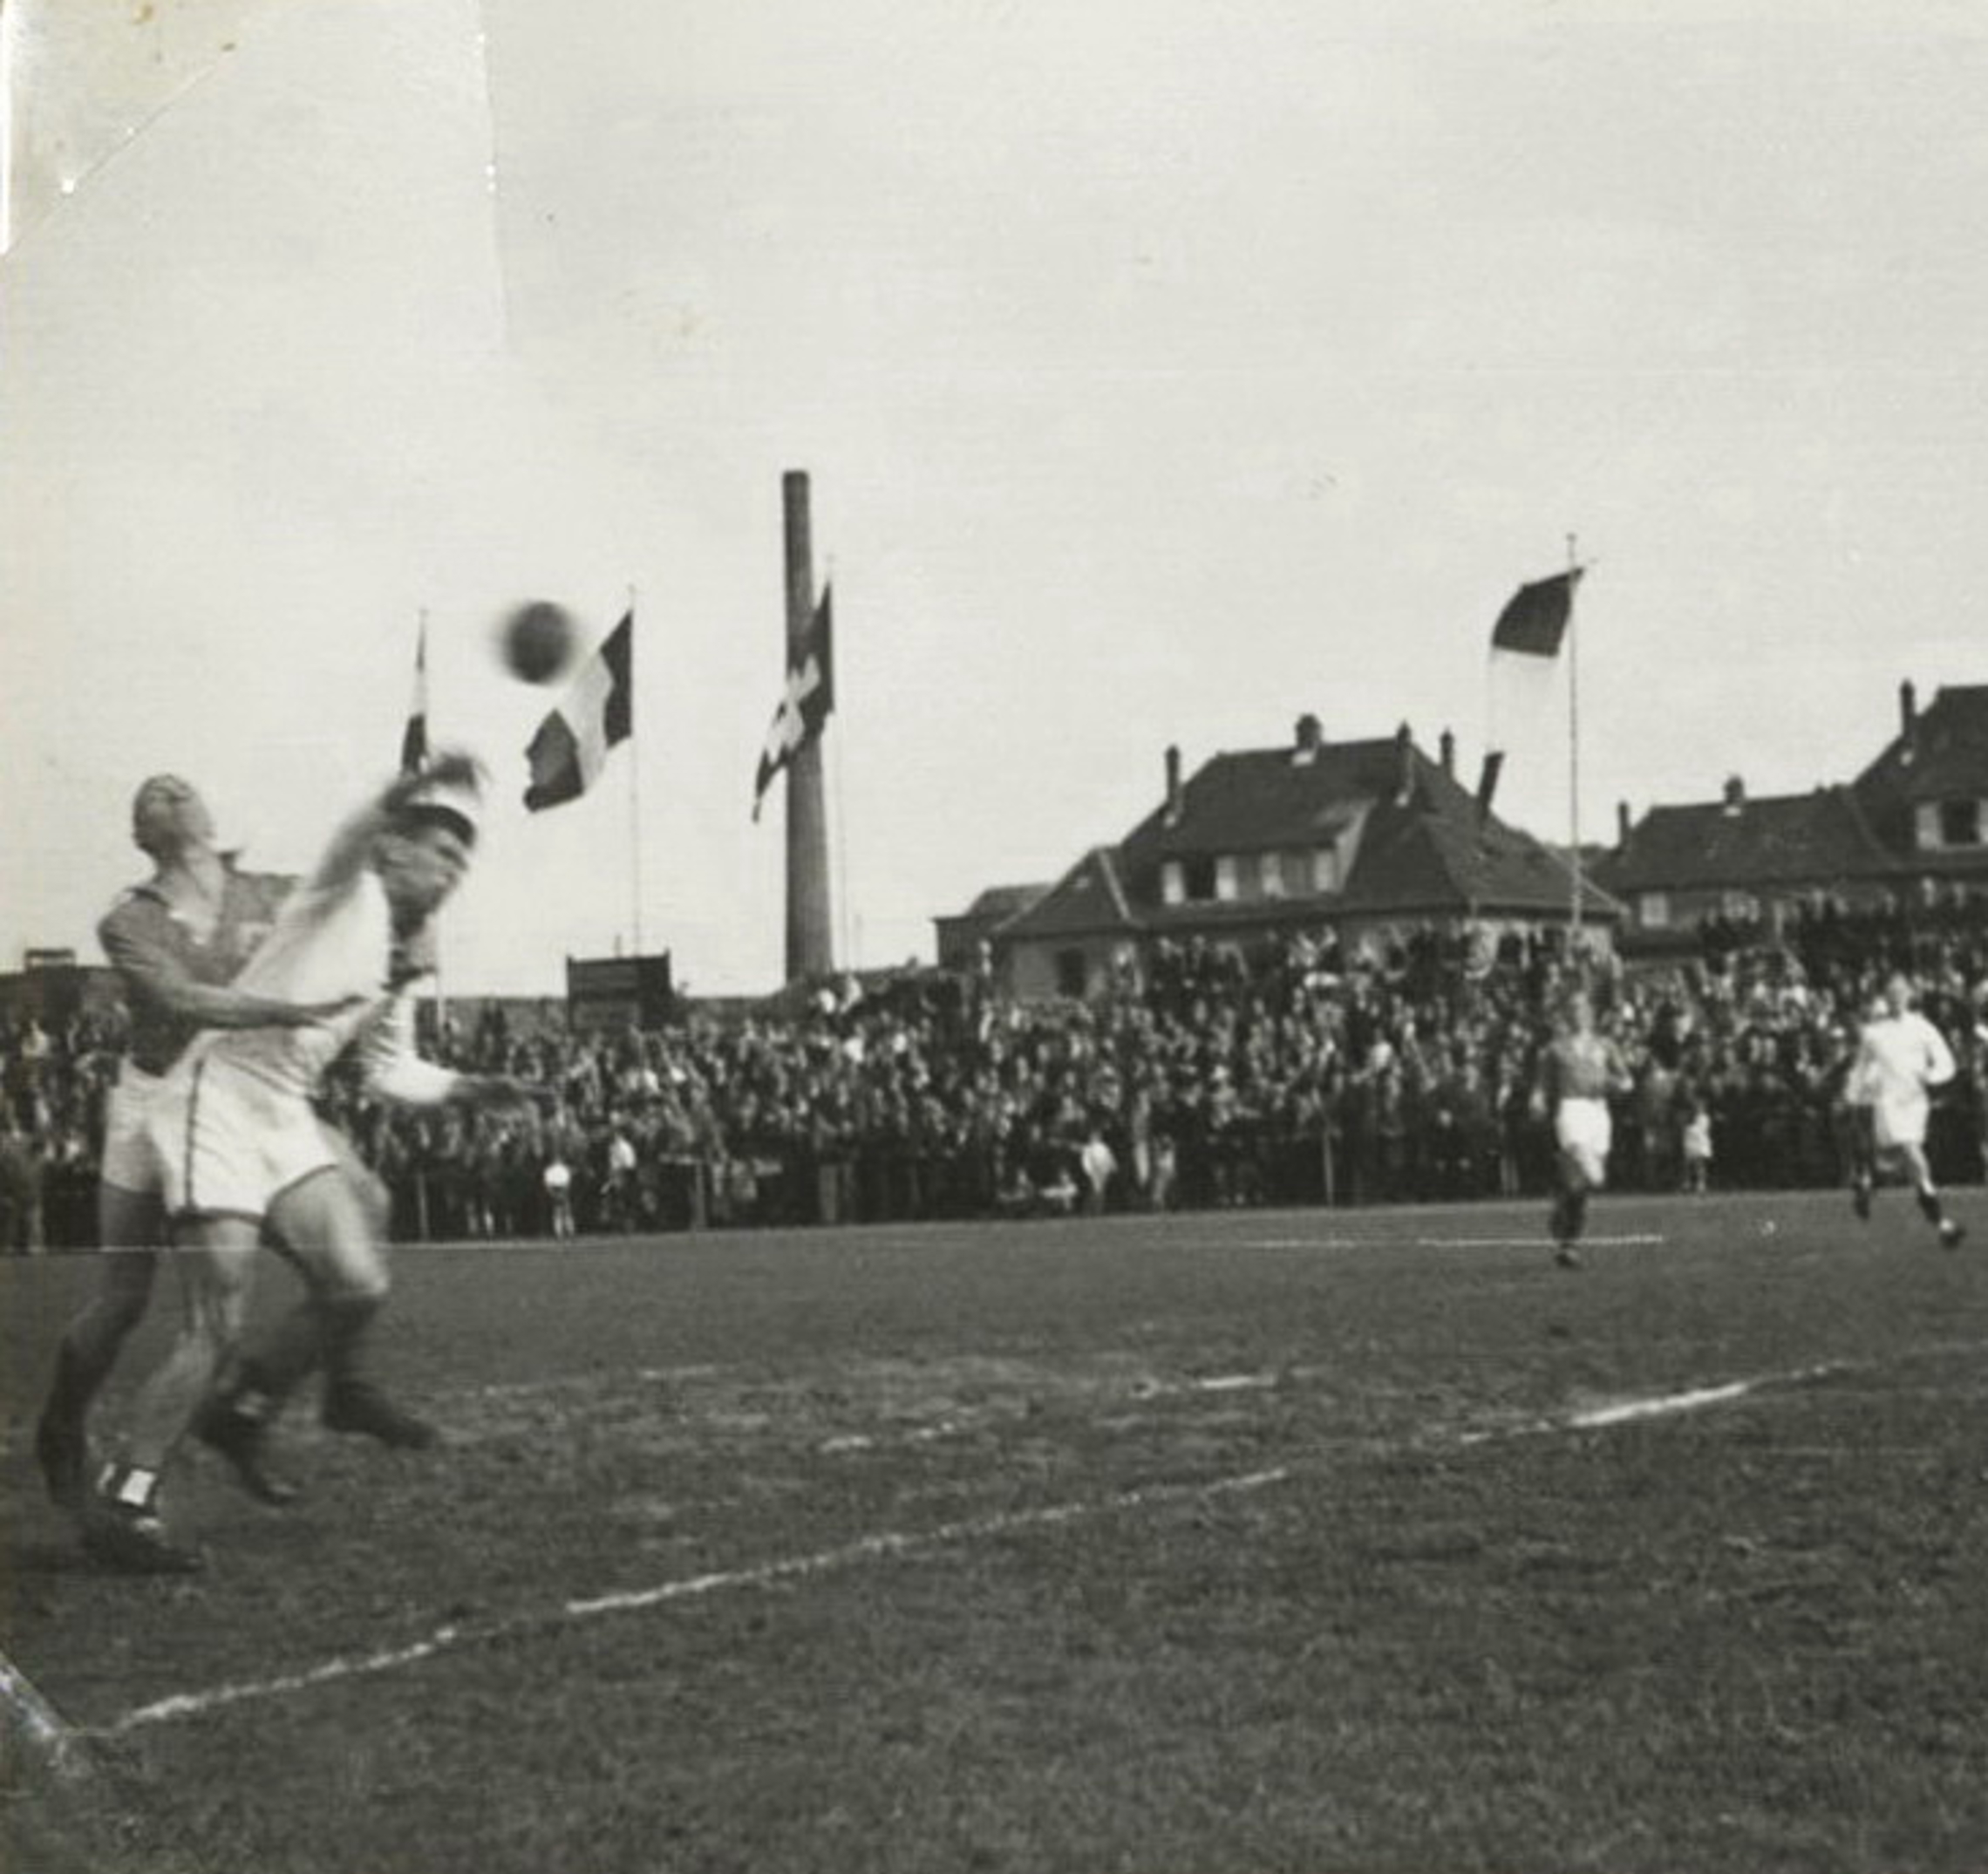 1946-05-19 Schweiz - Holland 14:7 (6:2), Mulhouse Stadion Boutzwiller, 4000 Zuschauer, Coupe de la Paix